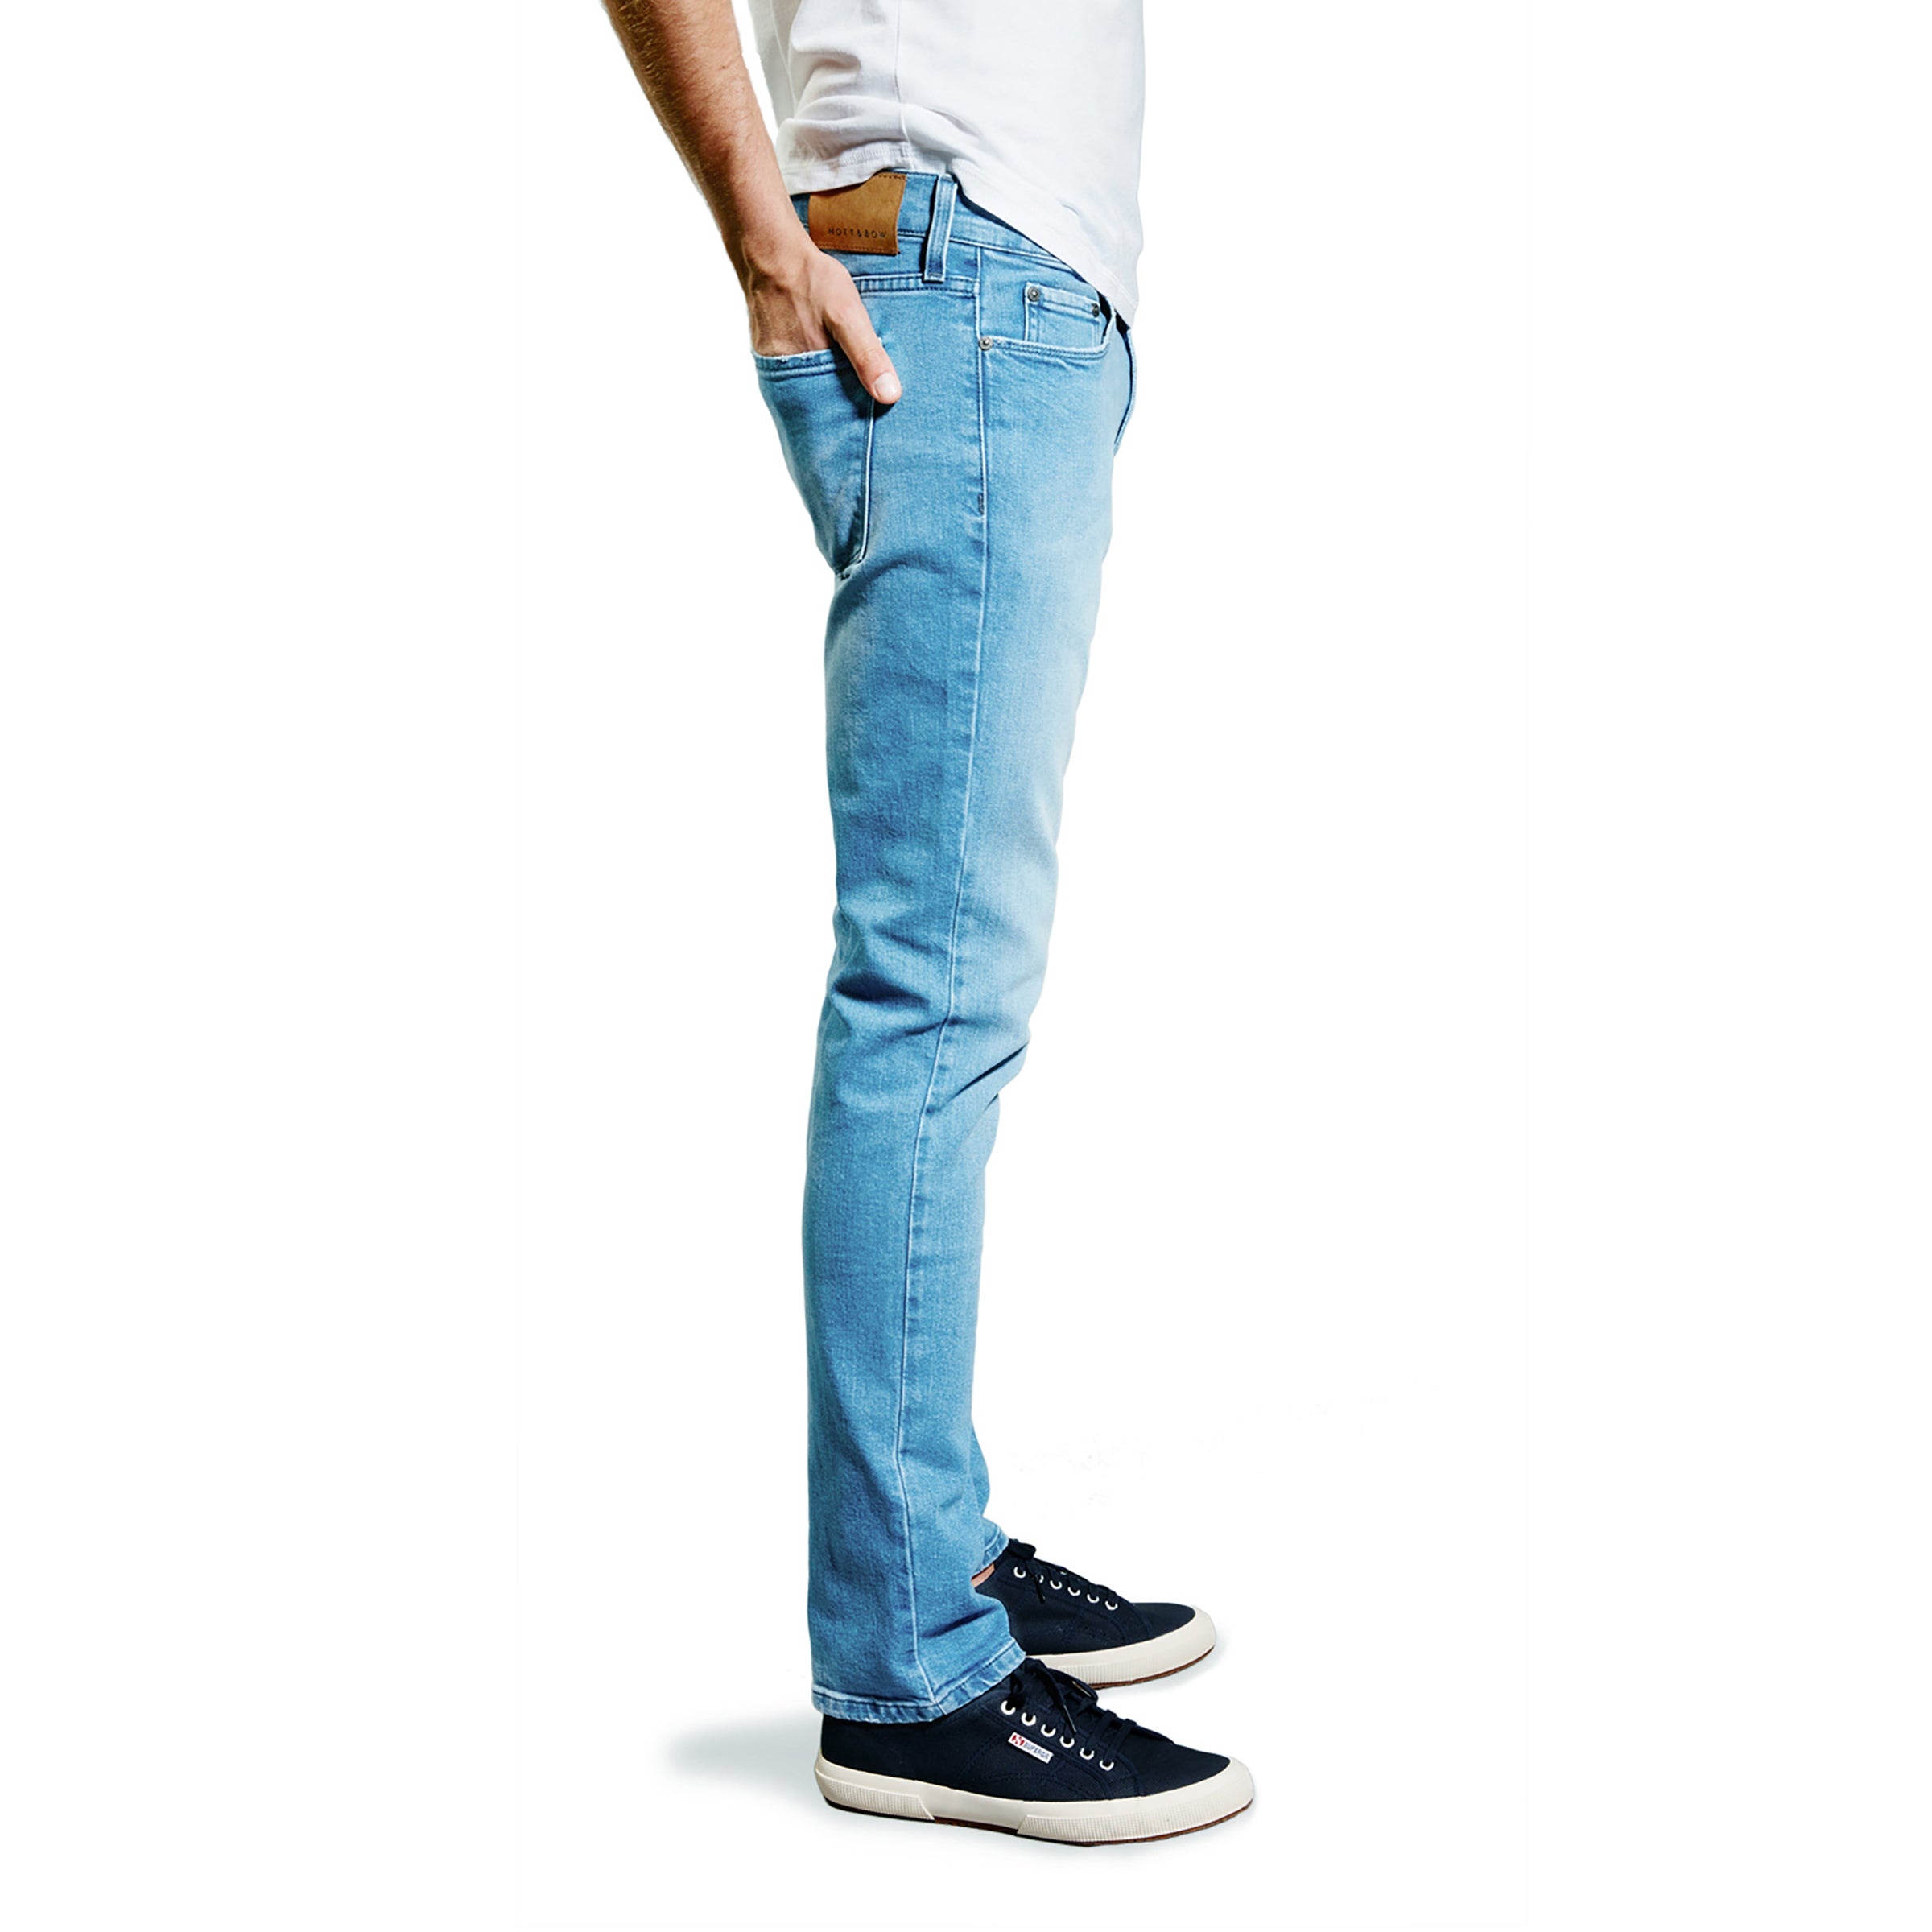 Men wearing Azul claro Slim Laight Jeans